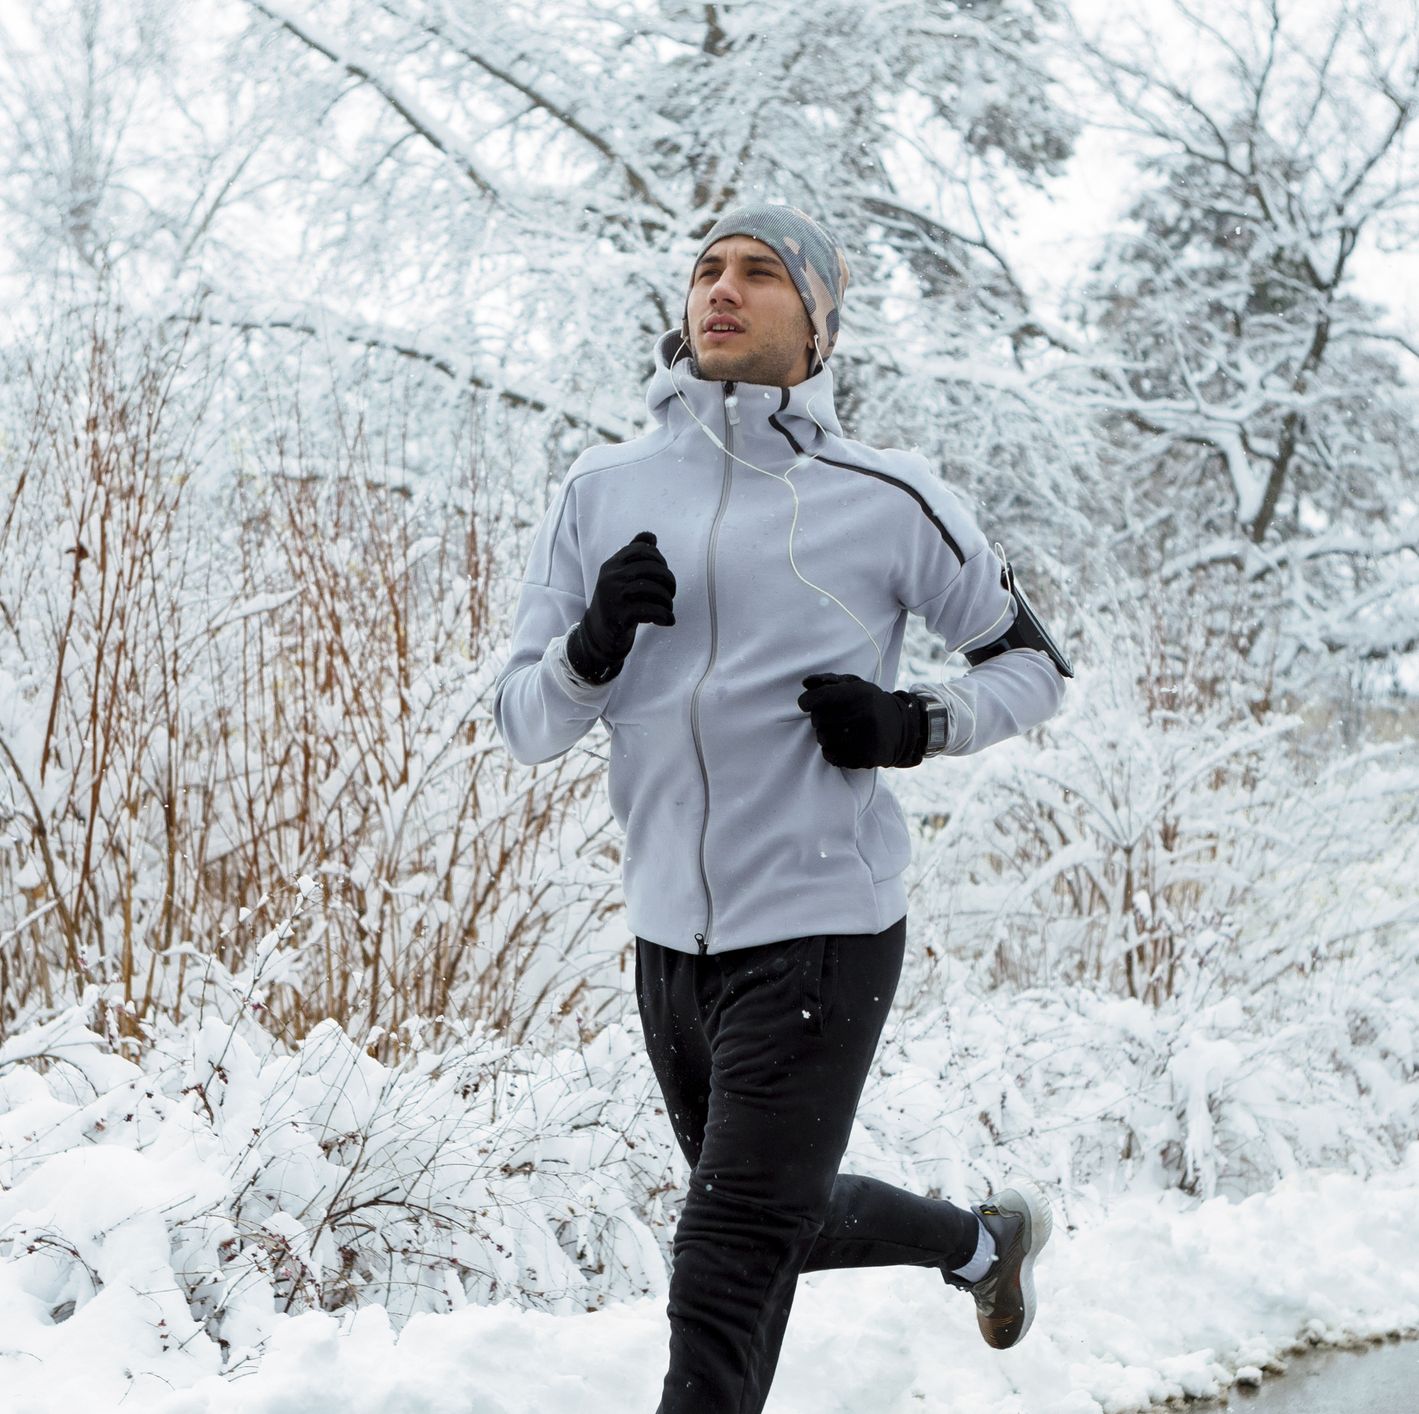 Olympic Marathoner Ryan Hall Shares His Best Advice for Winter Running